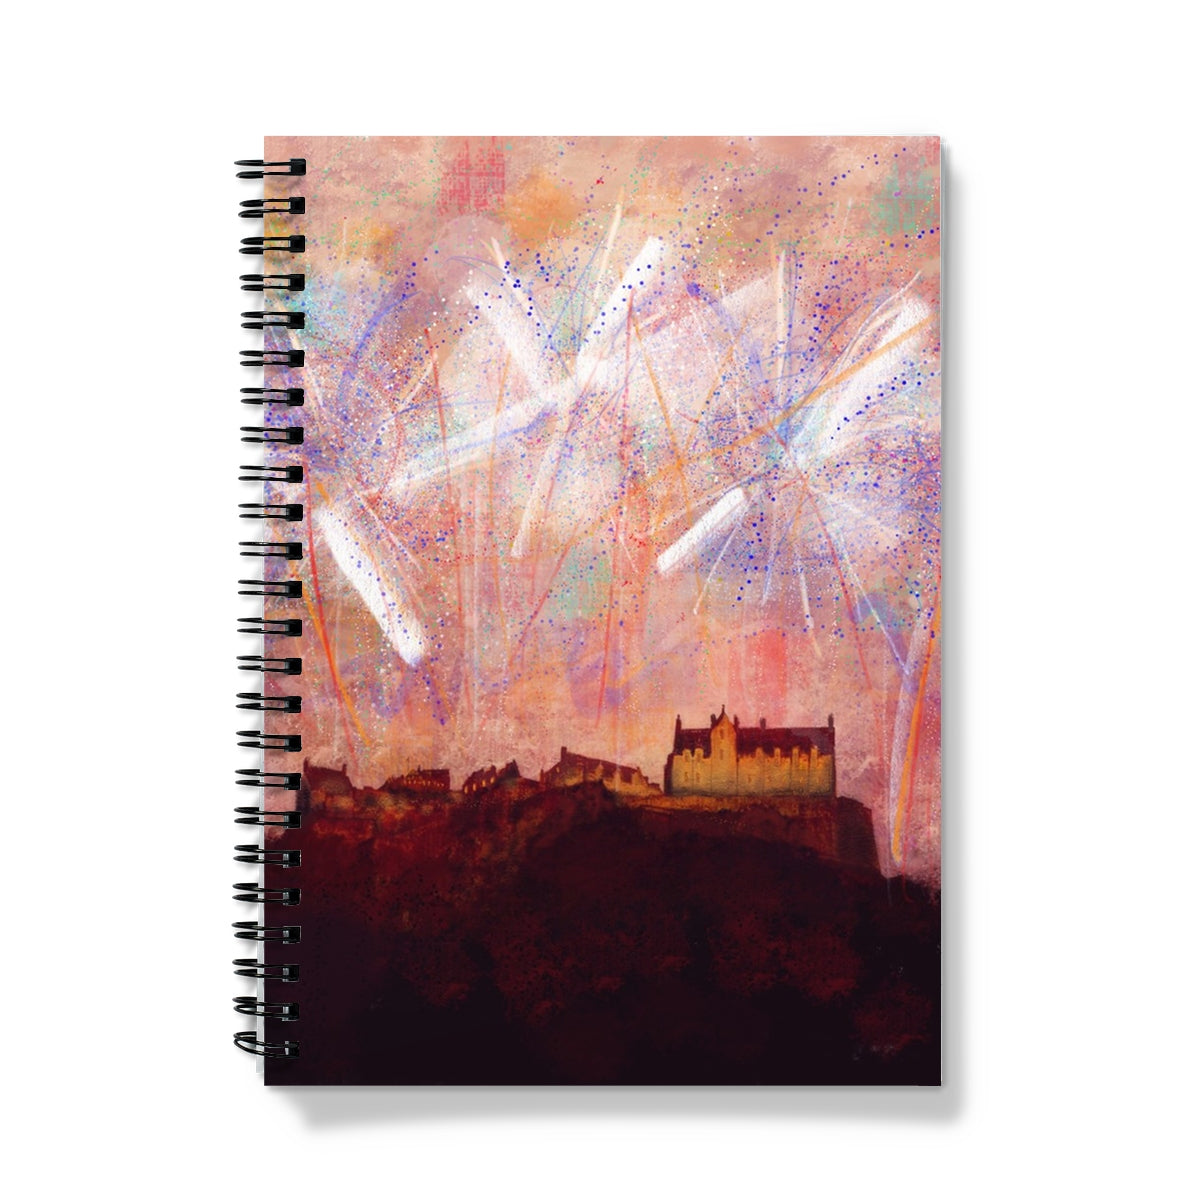 Edinburgh Castle Fireworks Art Gifts Notebook-Journals & Notebooks-Edinburgh & Glasgow Art Gallery-A4-Lined-Paintings, Prints, Homeware, Art Gifts From Scotland By Scottish Artist Kevin Hunter